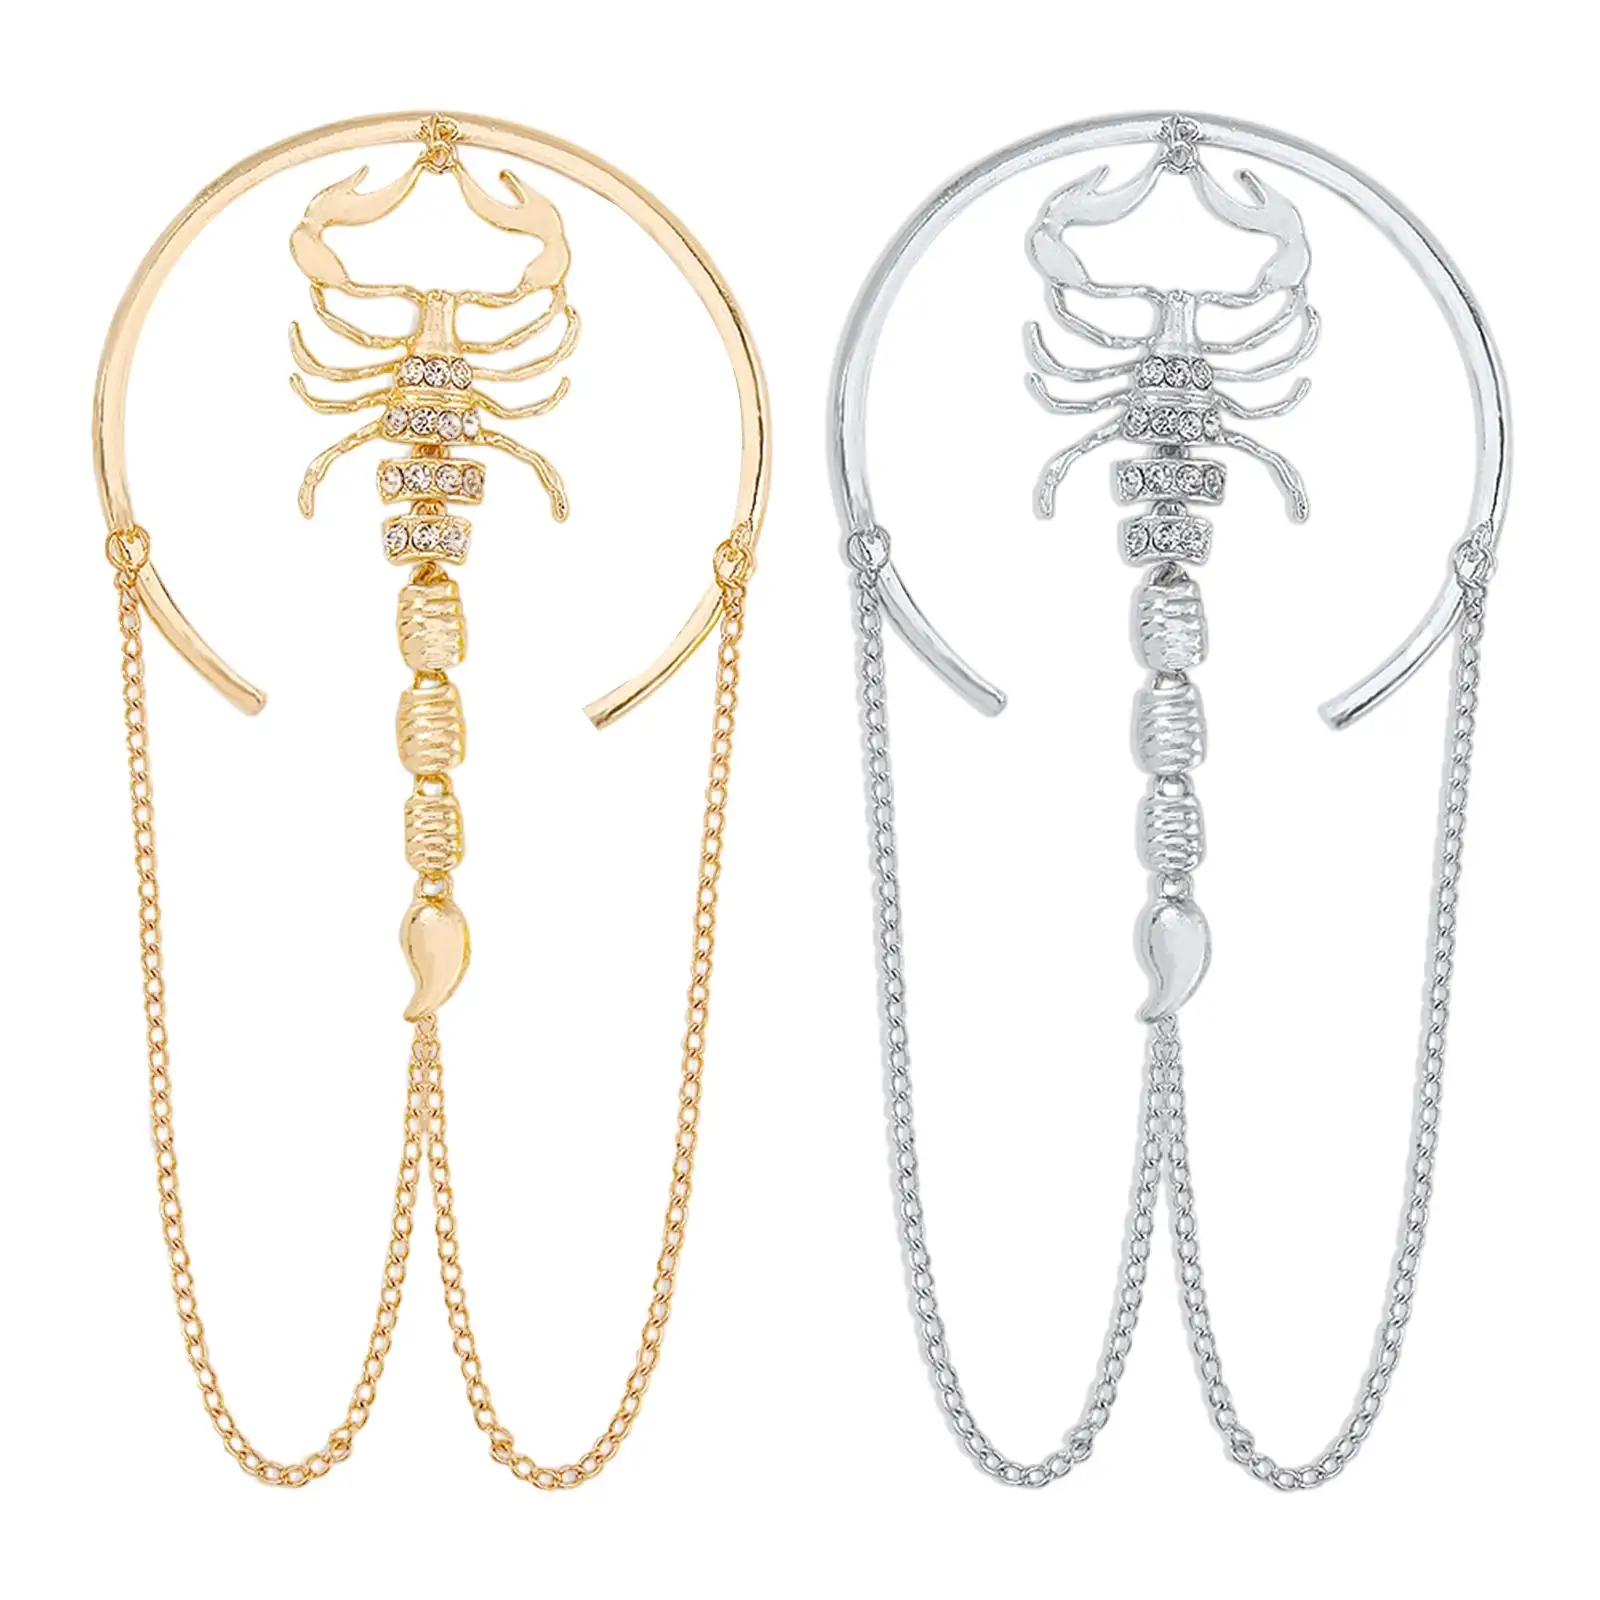 Metal Scorpion Armlet Bracelet Chain Wrap Open for Girls Armband Jewelry